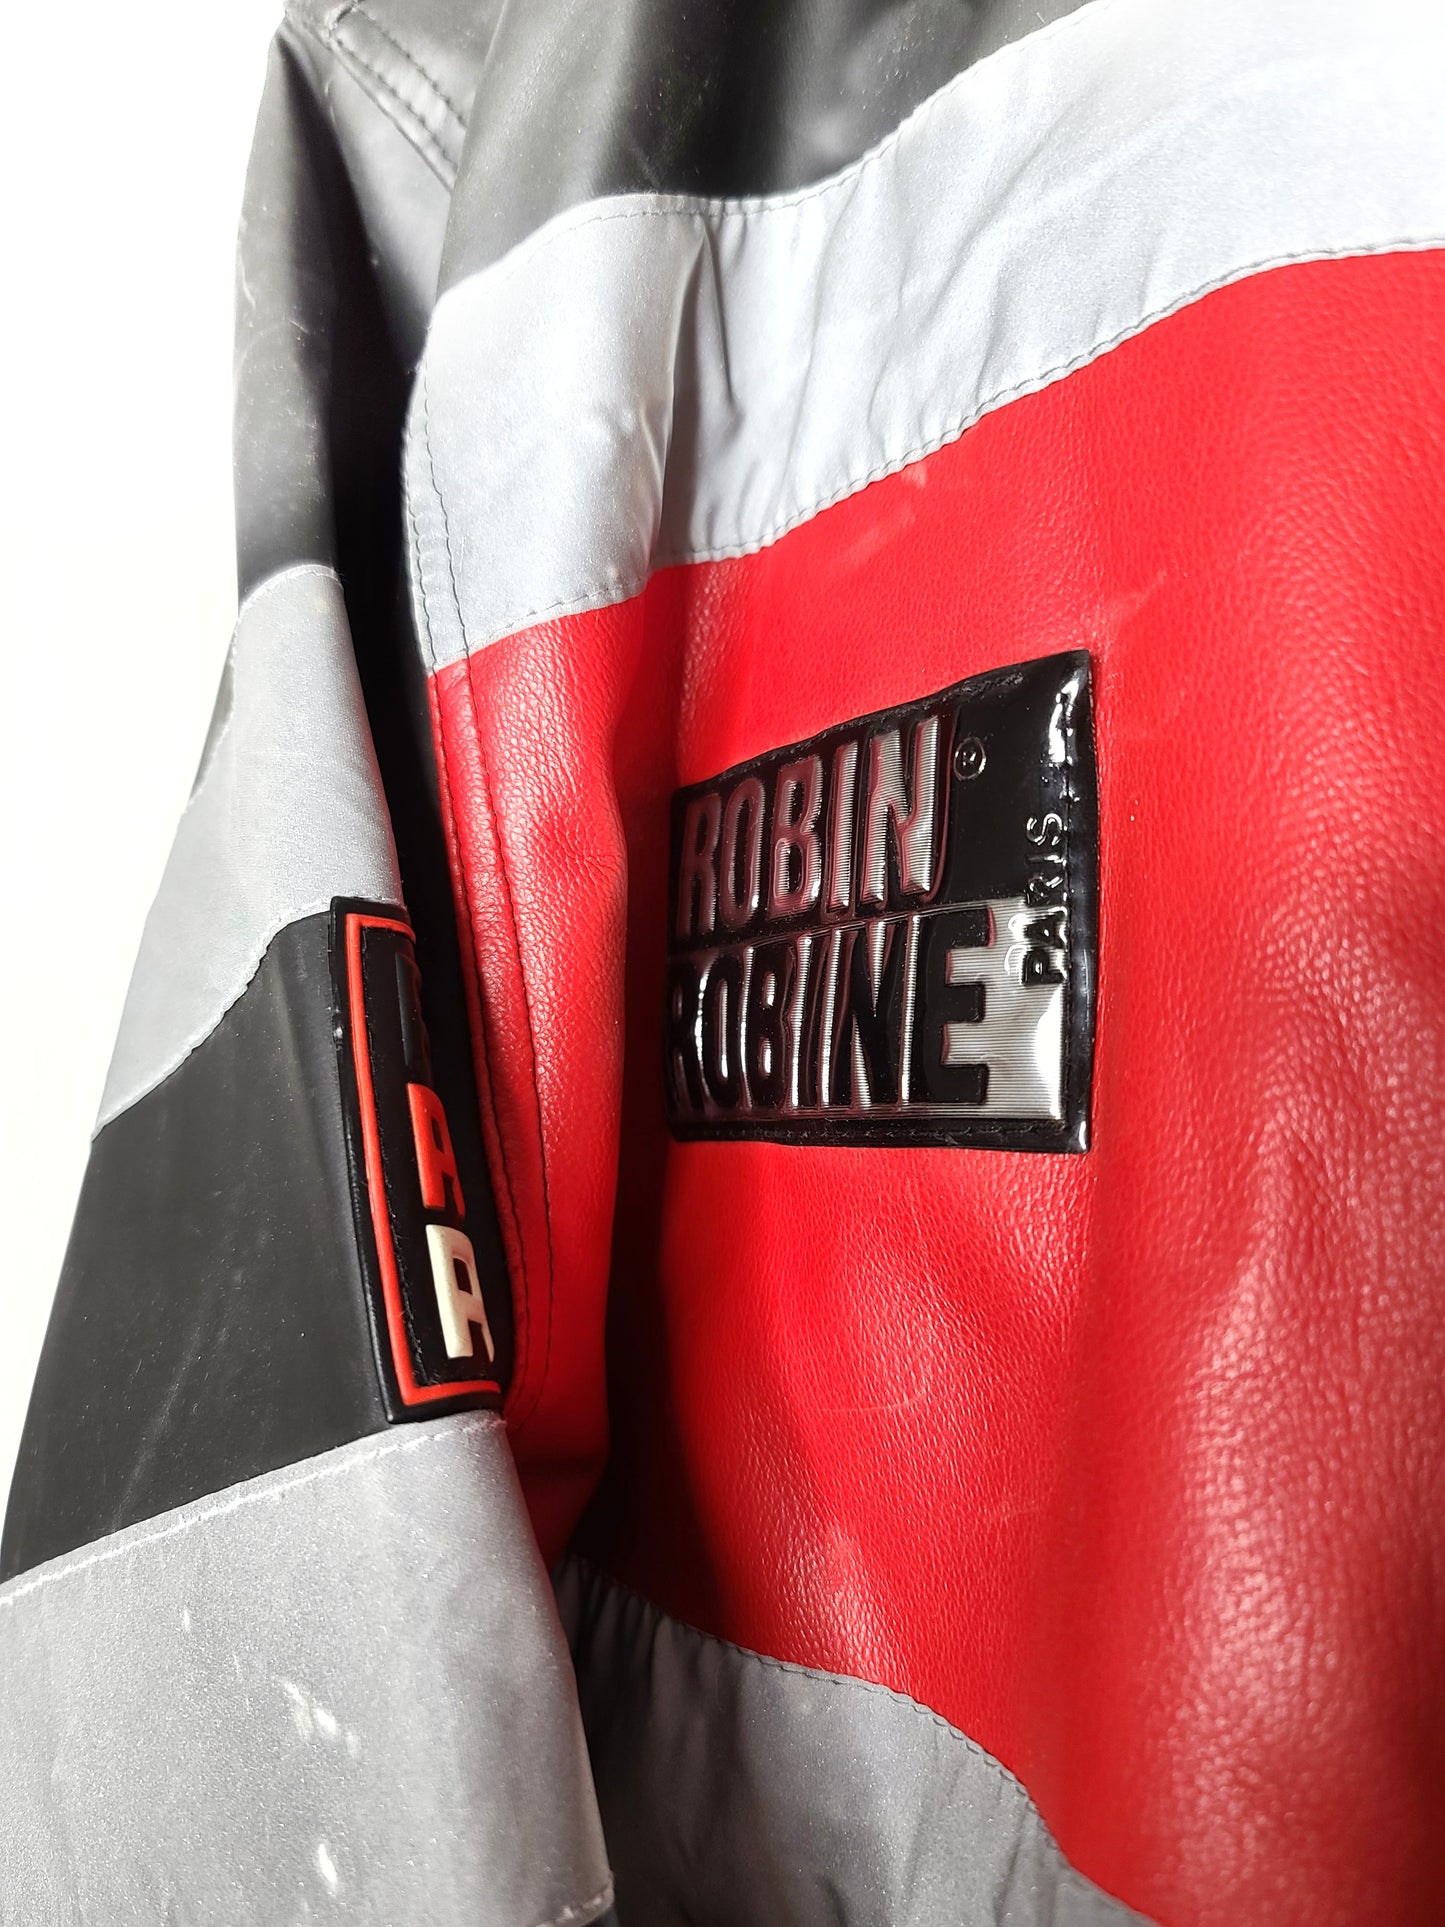 Veste vintage Robin robine noire et rouge - zimfriperie